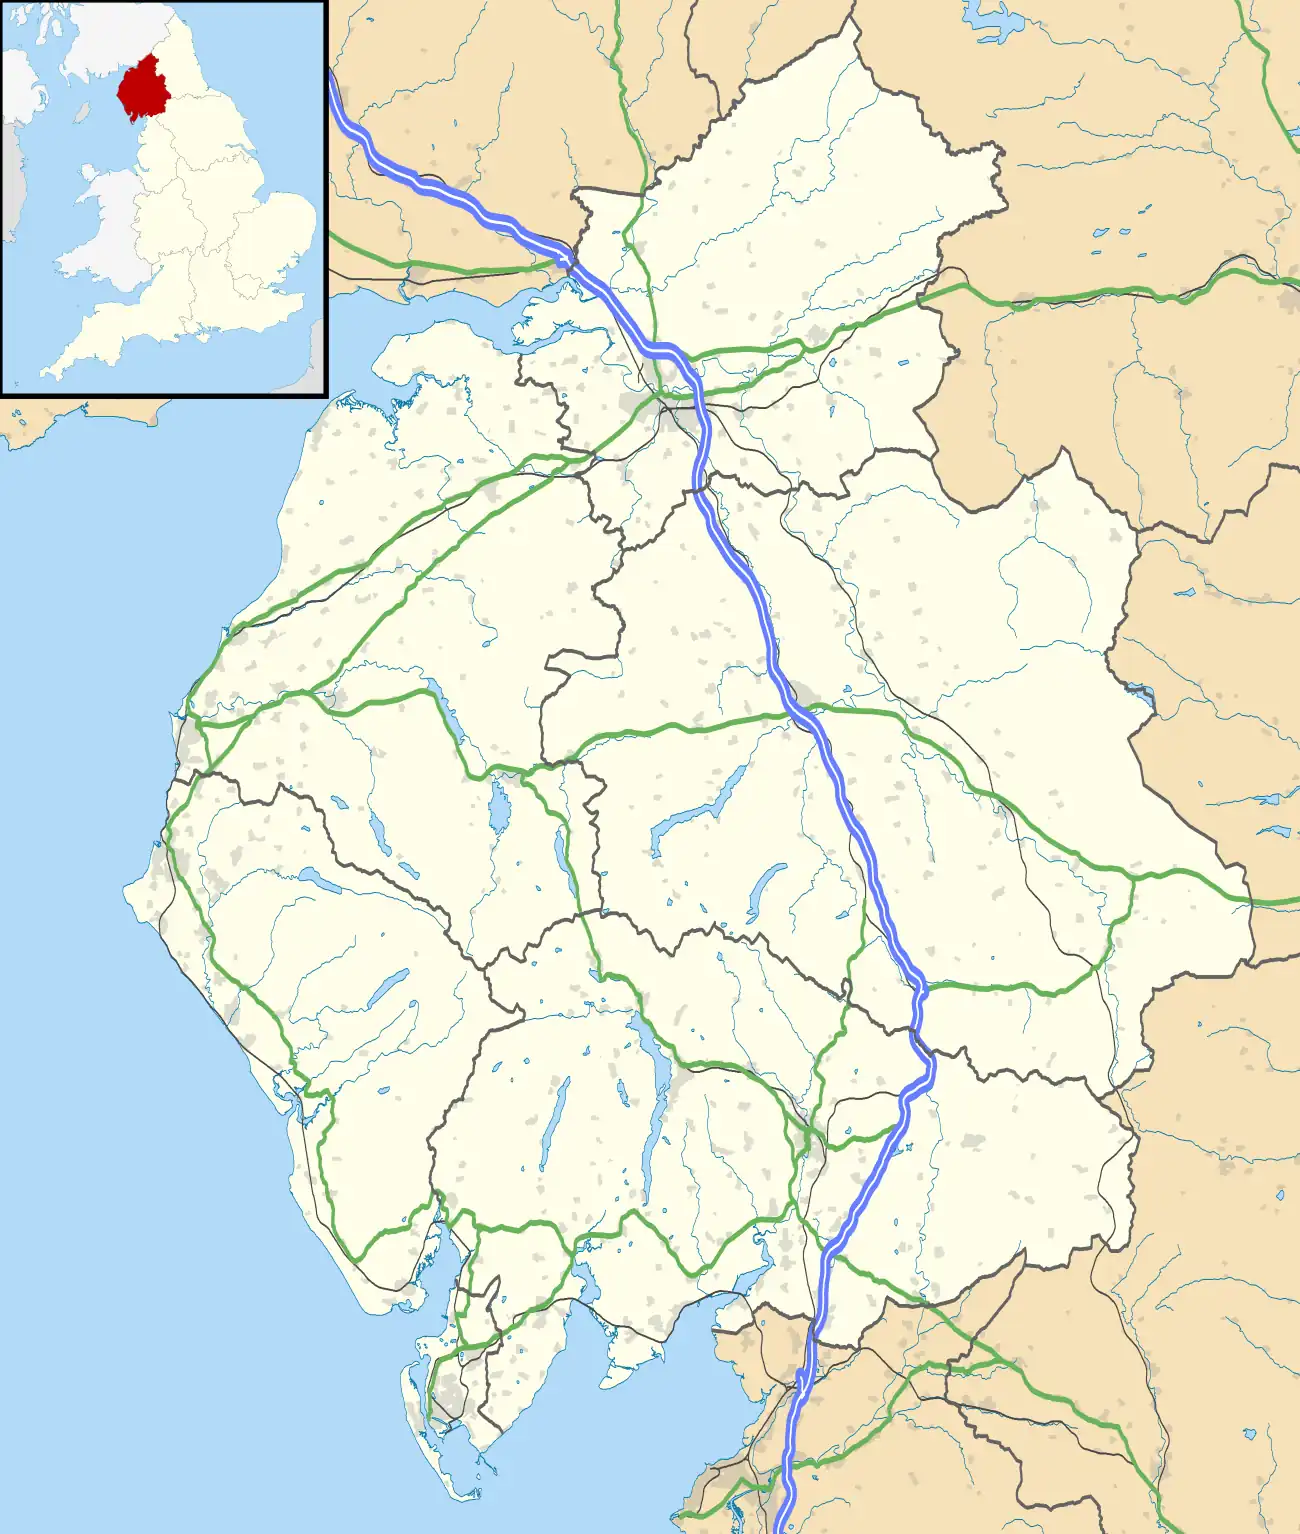 RAF Carlisle is located in Cumbria